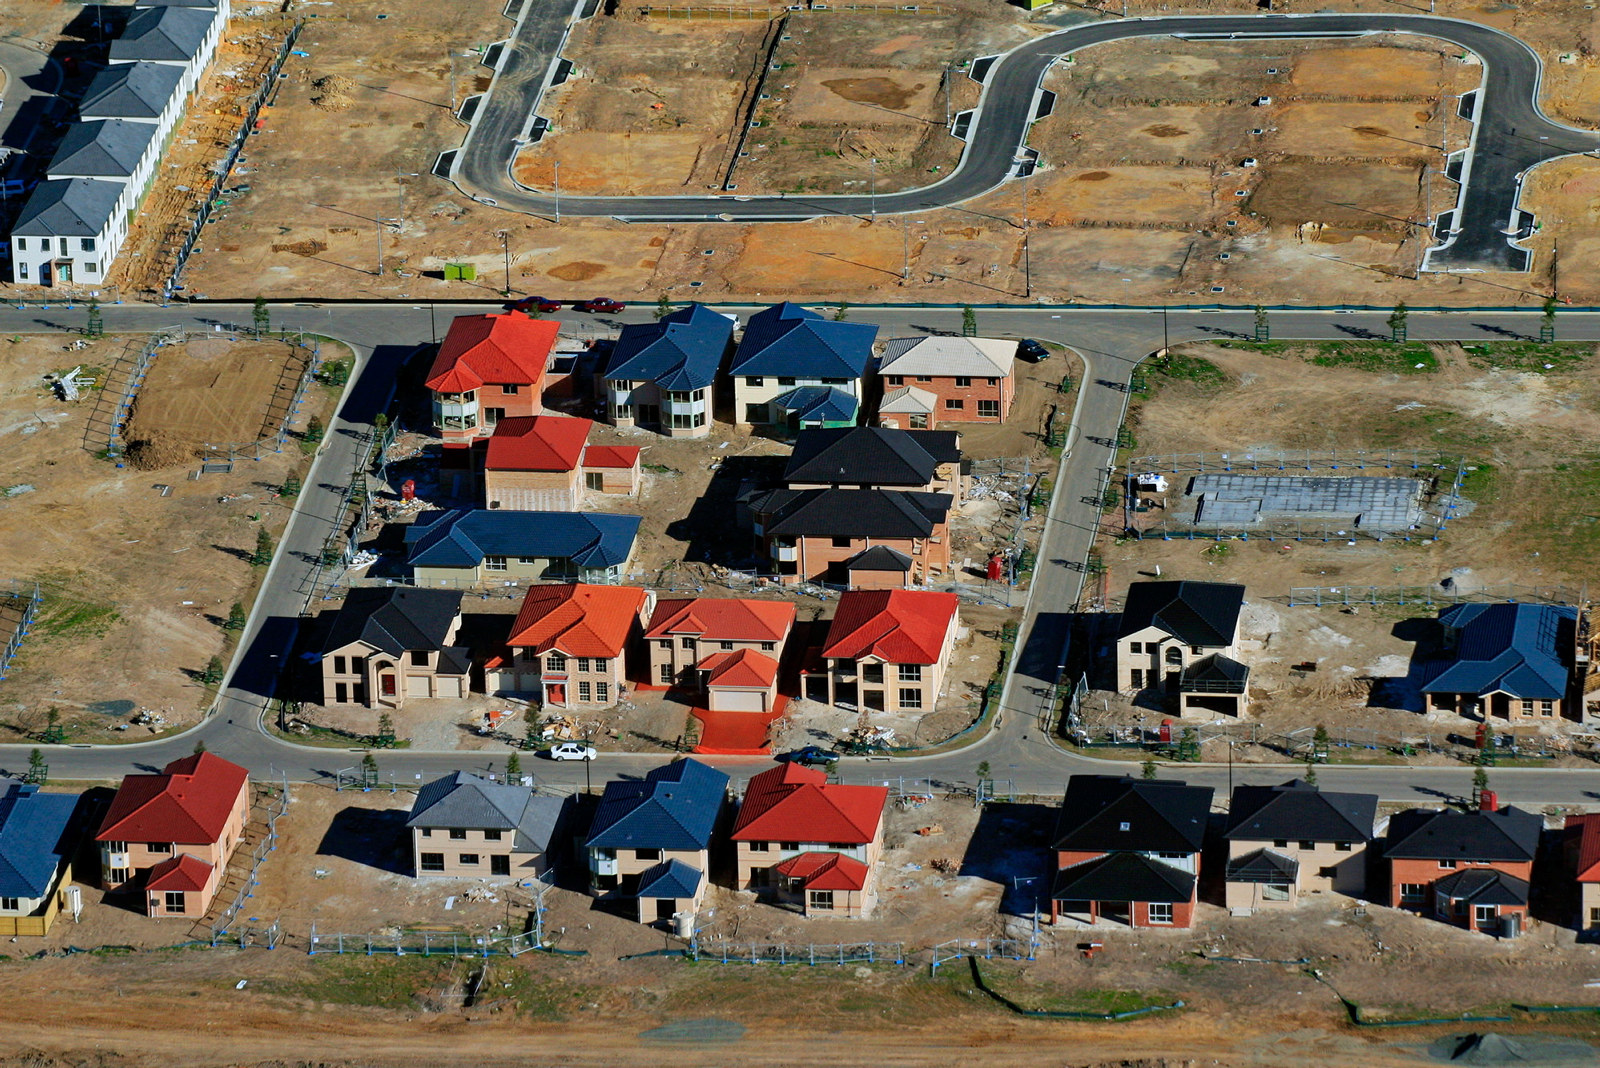 Boomburbs - "Edgewood: Aerial Photography of New Suburbia"